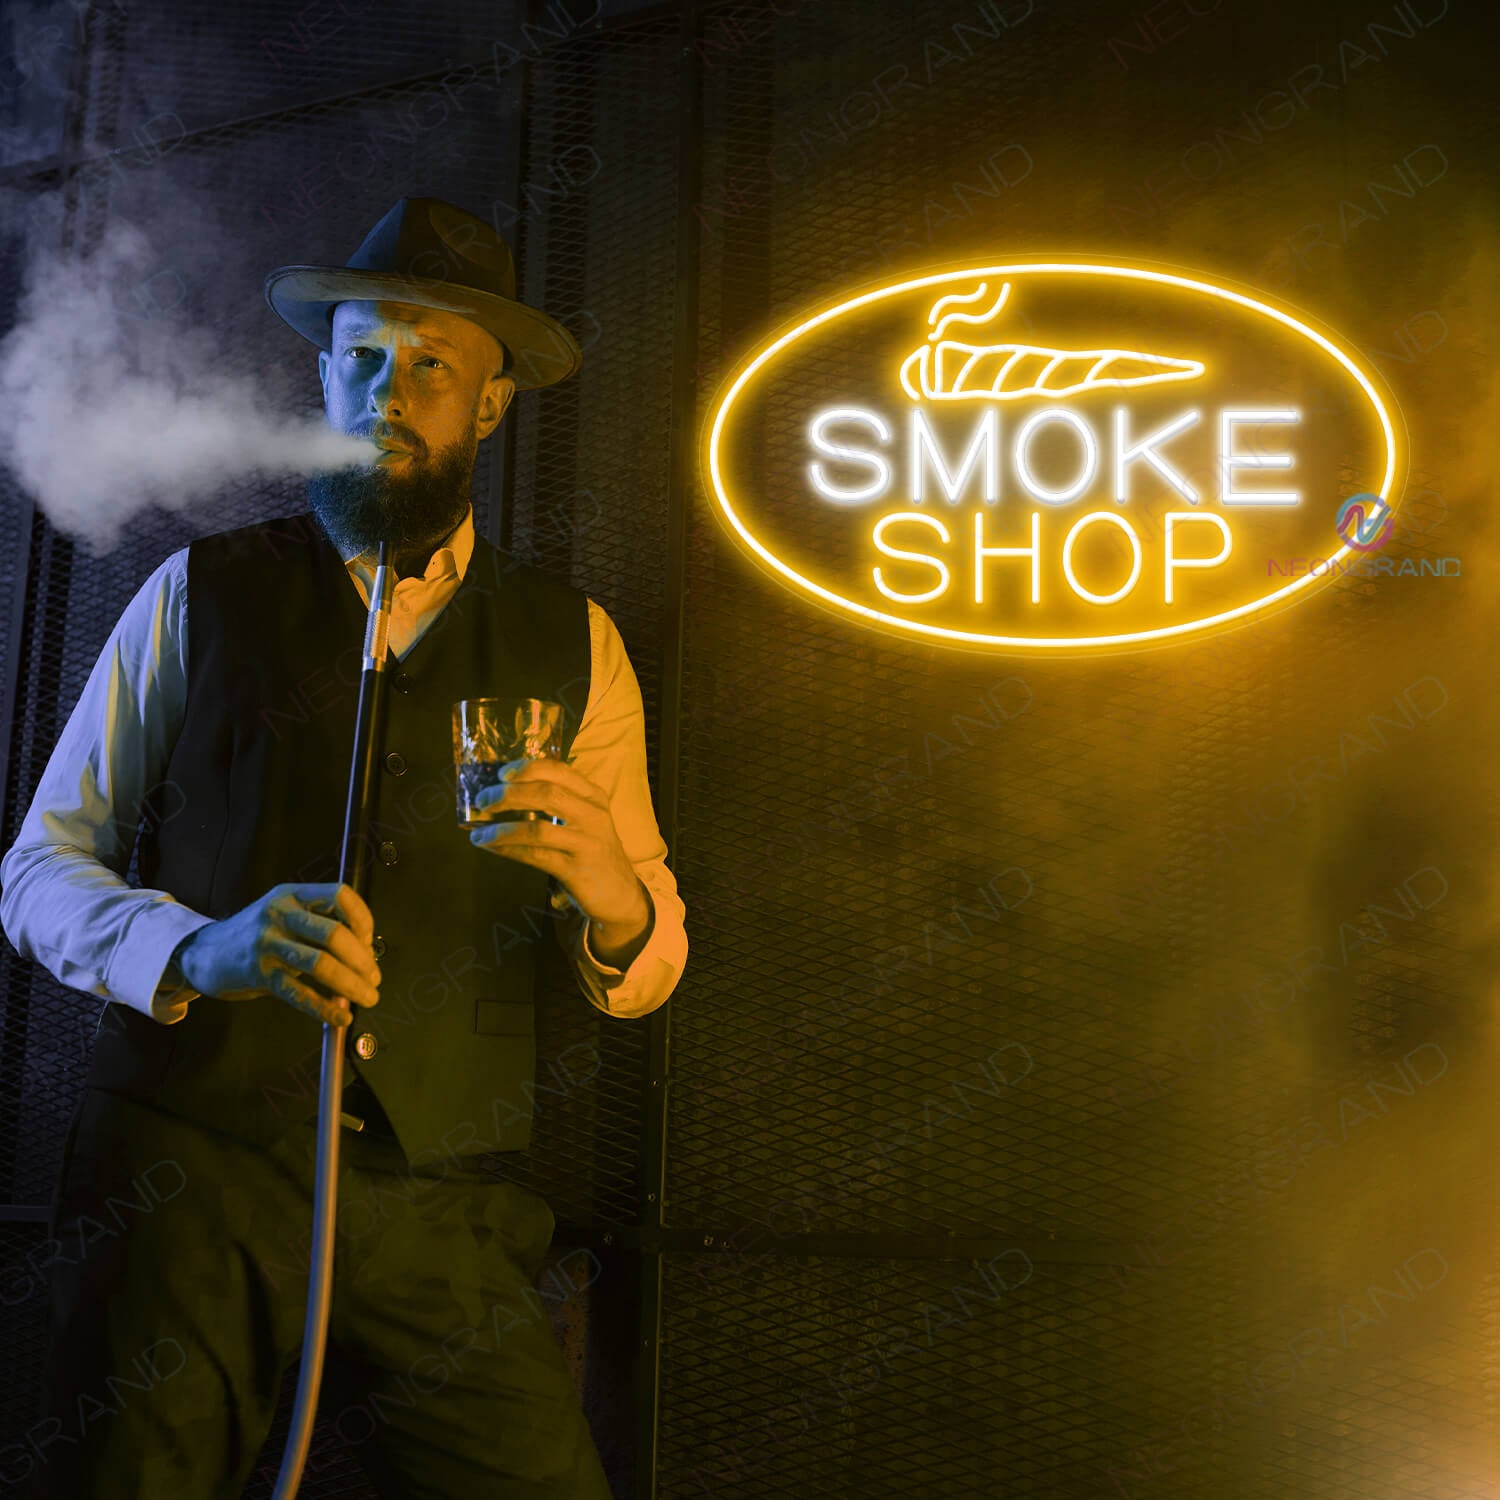 Smoke Shop Neon Sign Smoking Led Light